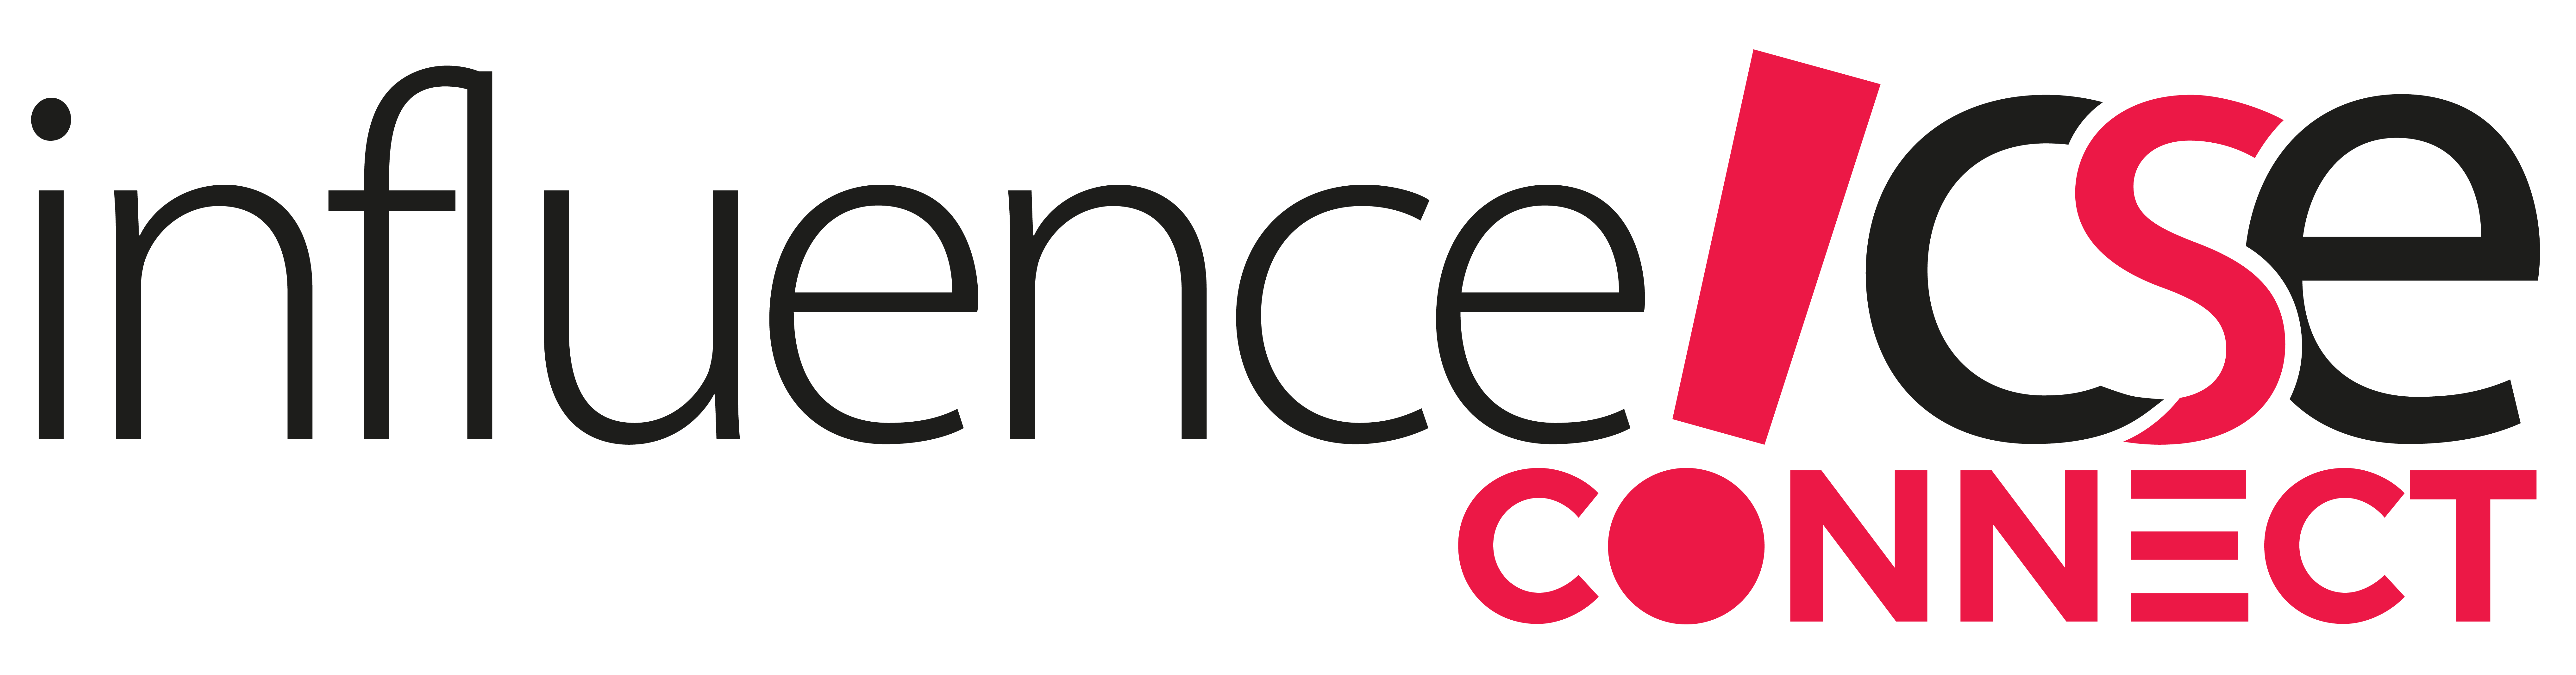 influence-cse-connect-logo